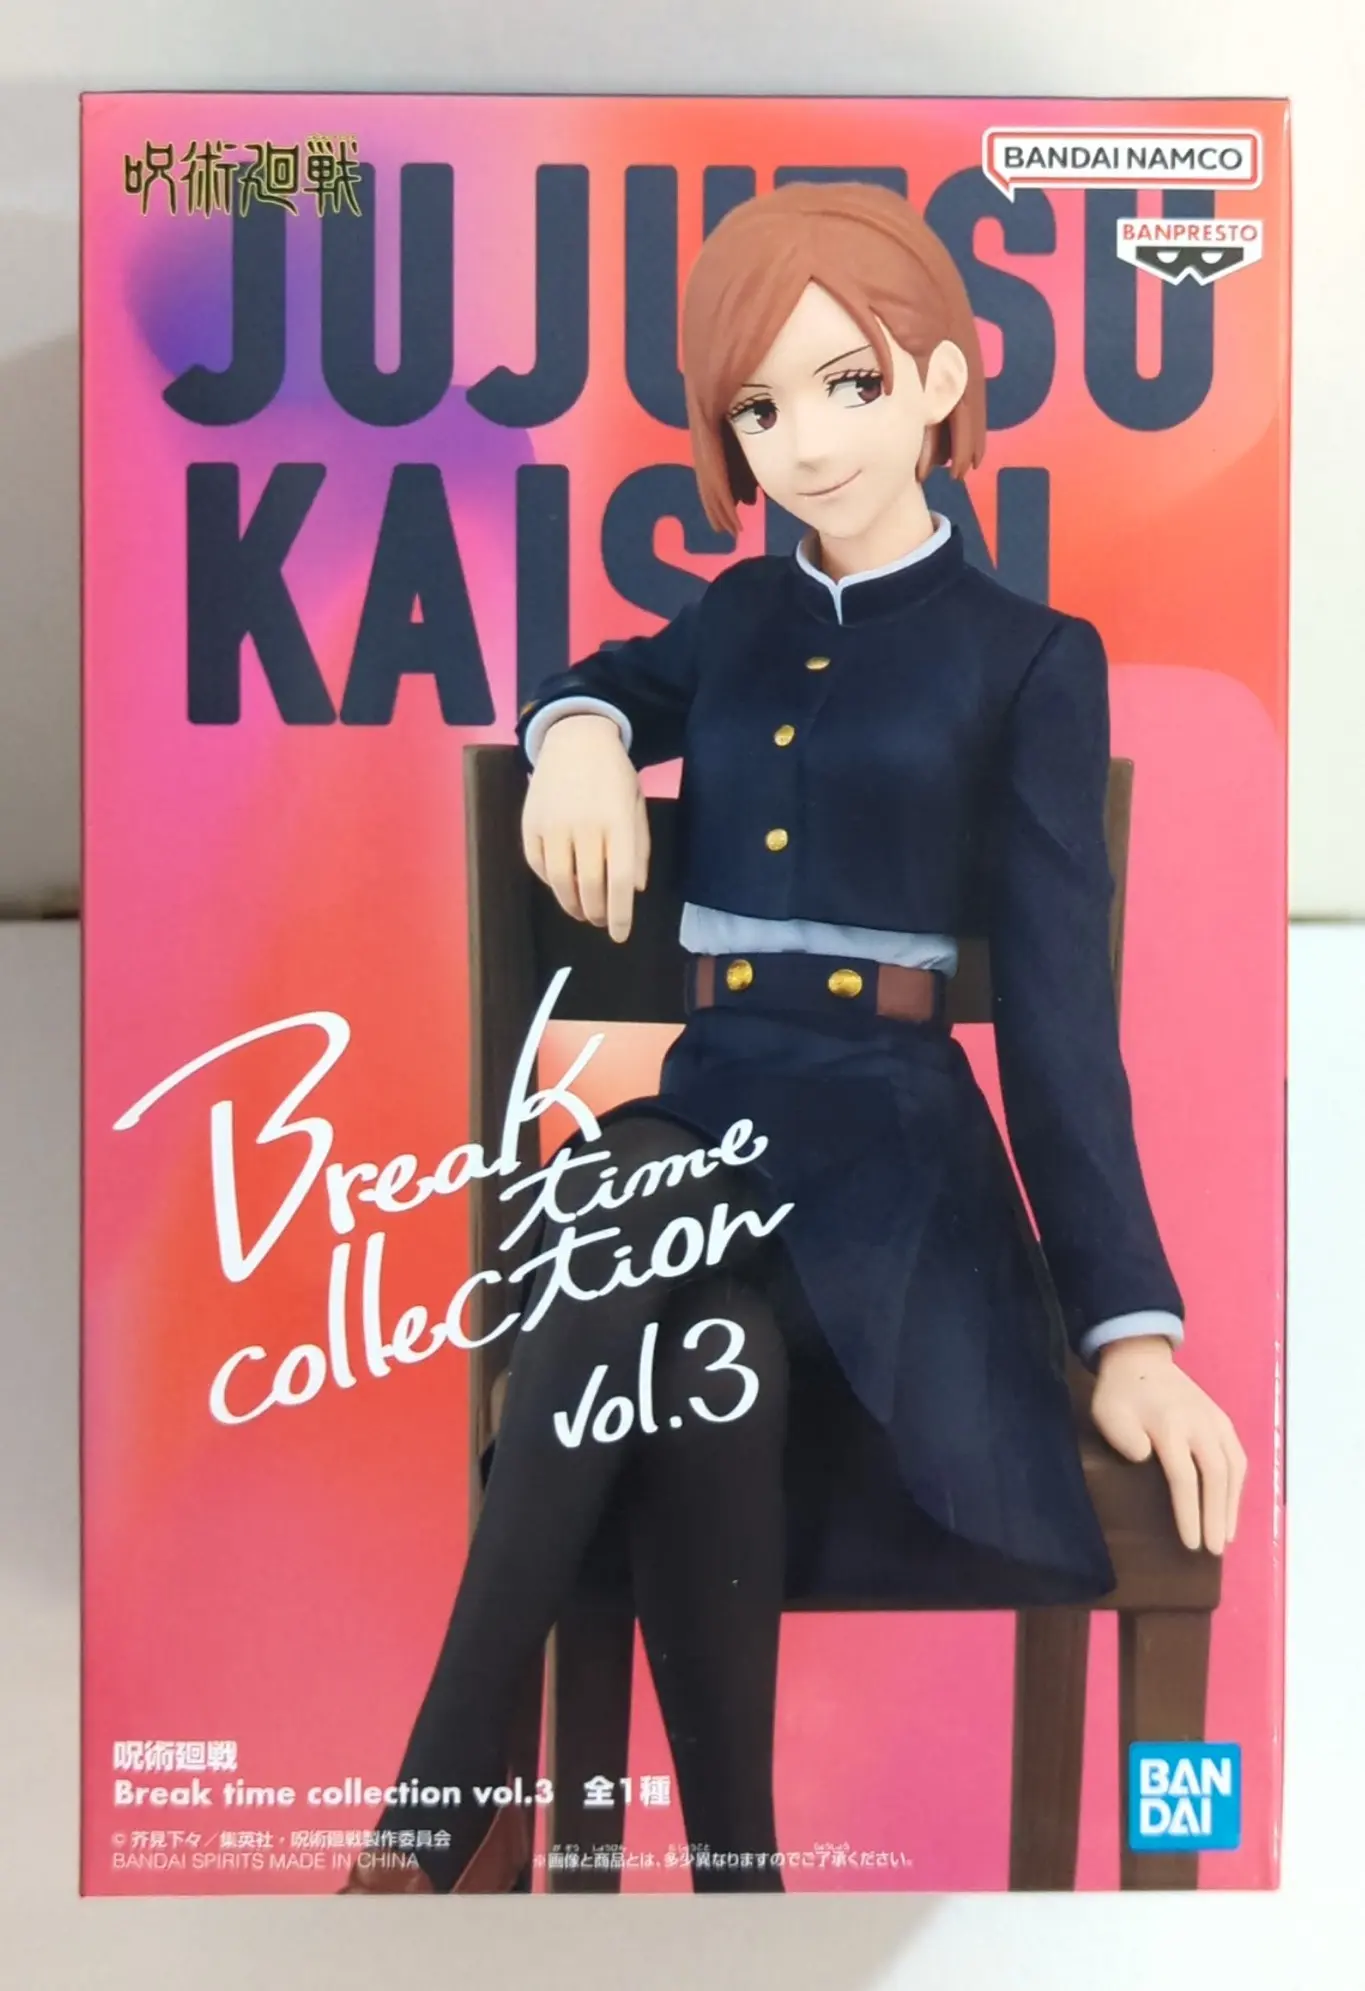 Break time collection - Jujutsu Kaisen / Kugisaki Nobara